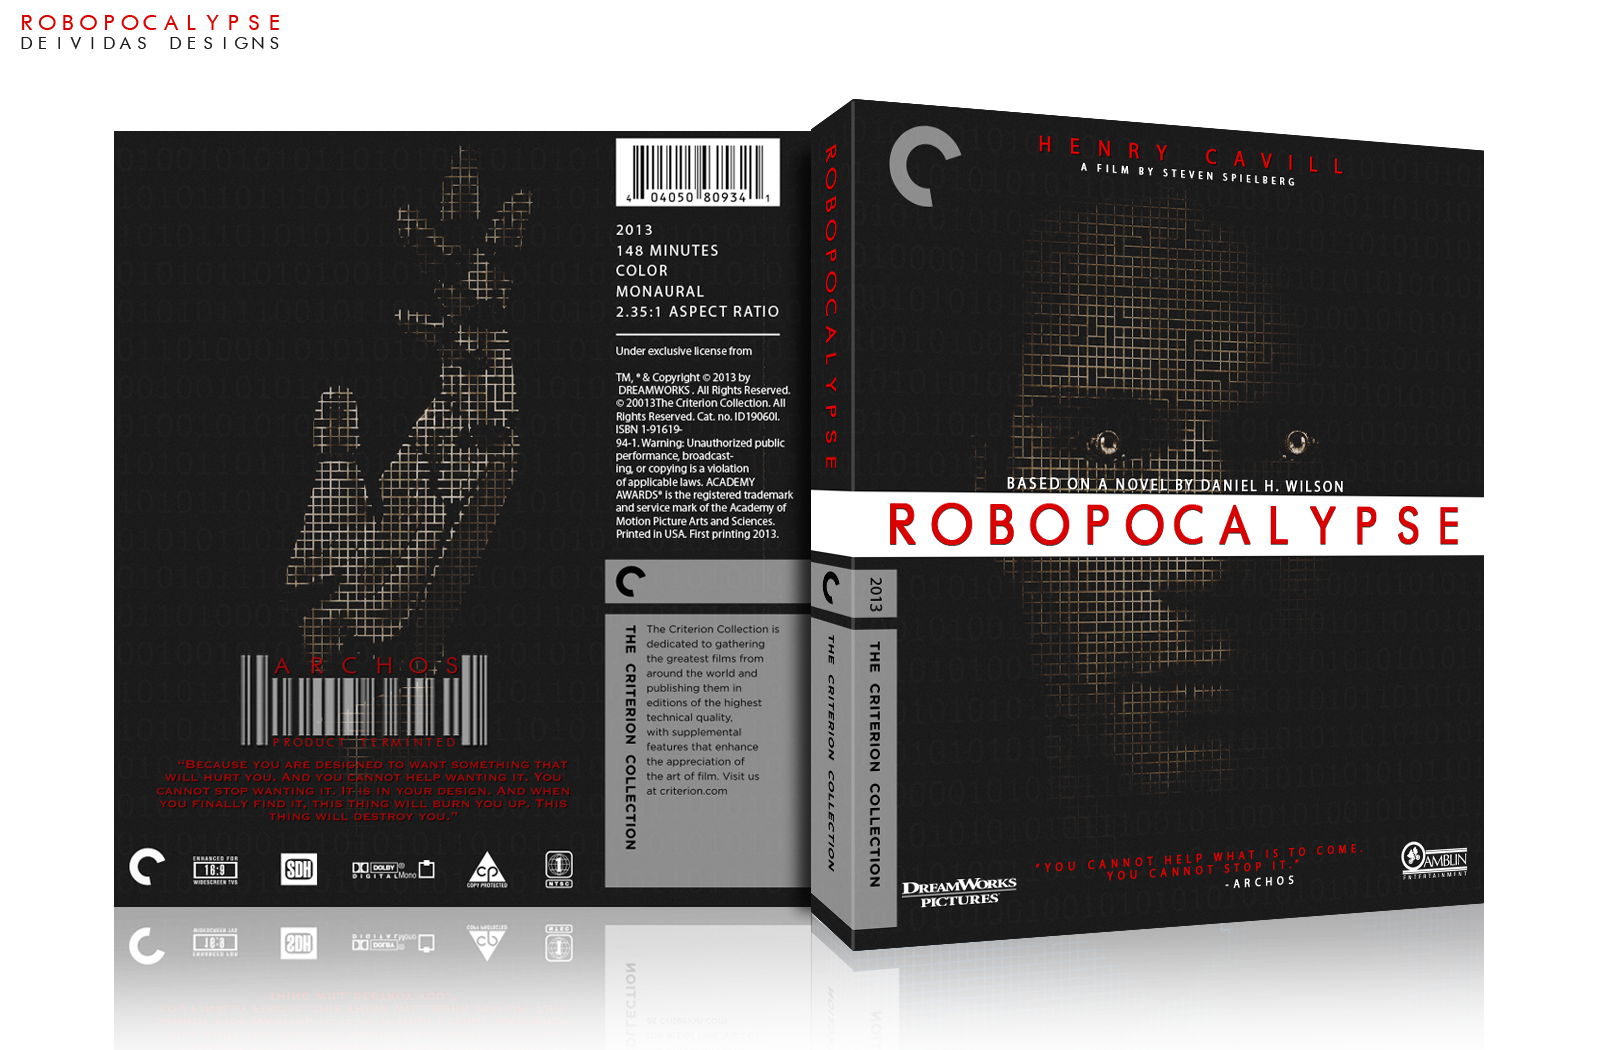 Robopocalypse box cover